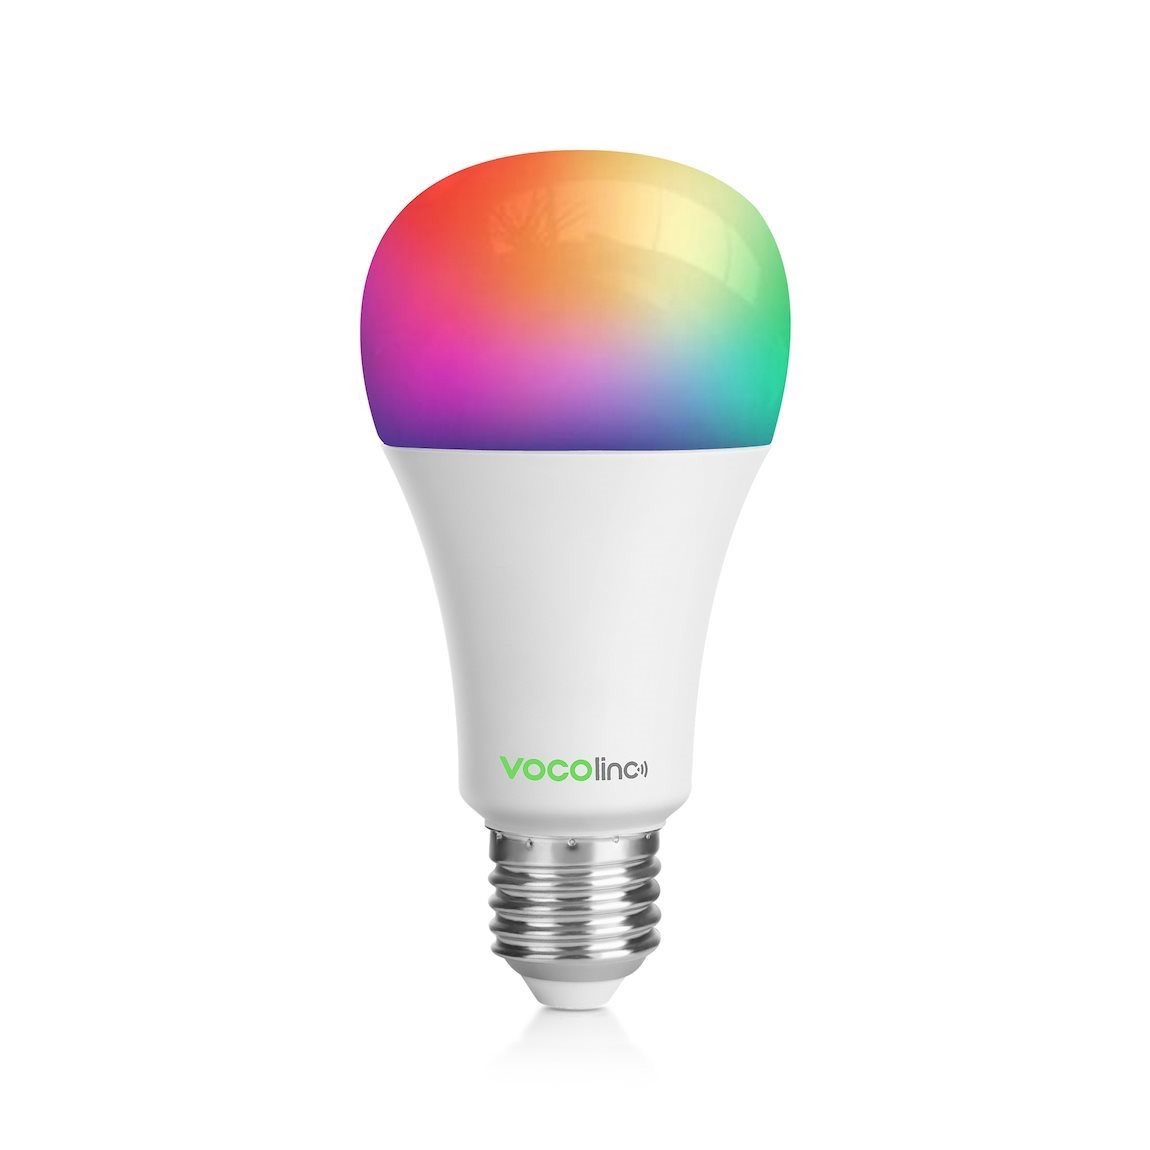 LED izzó Vocolinc Smart izzó L3 ColorLight